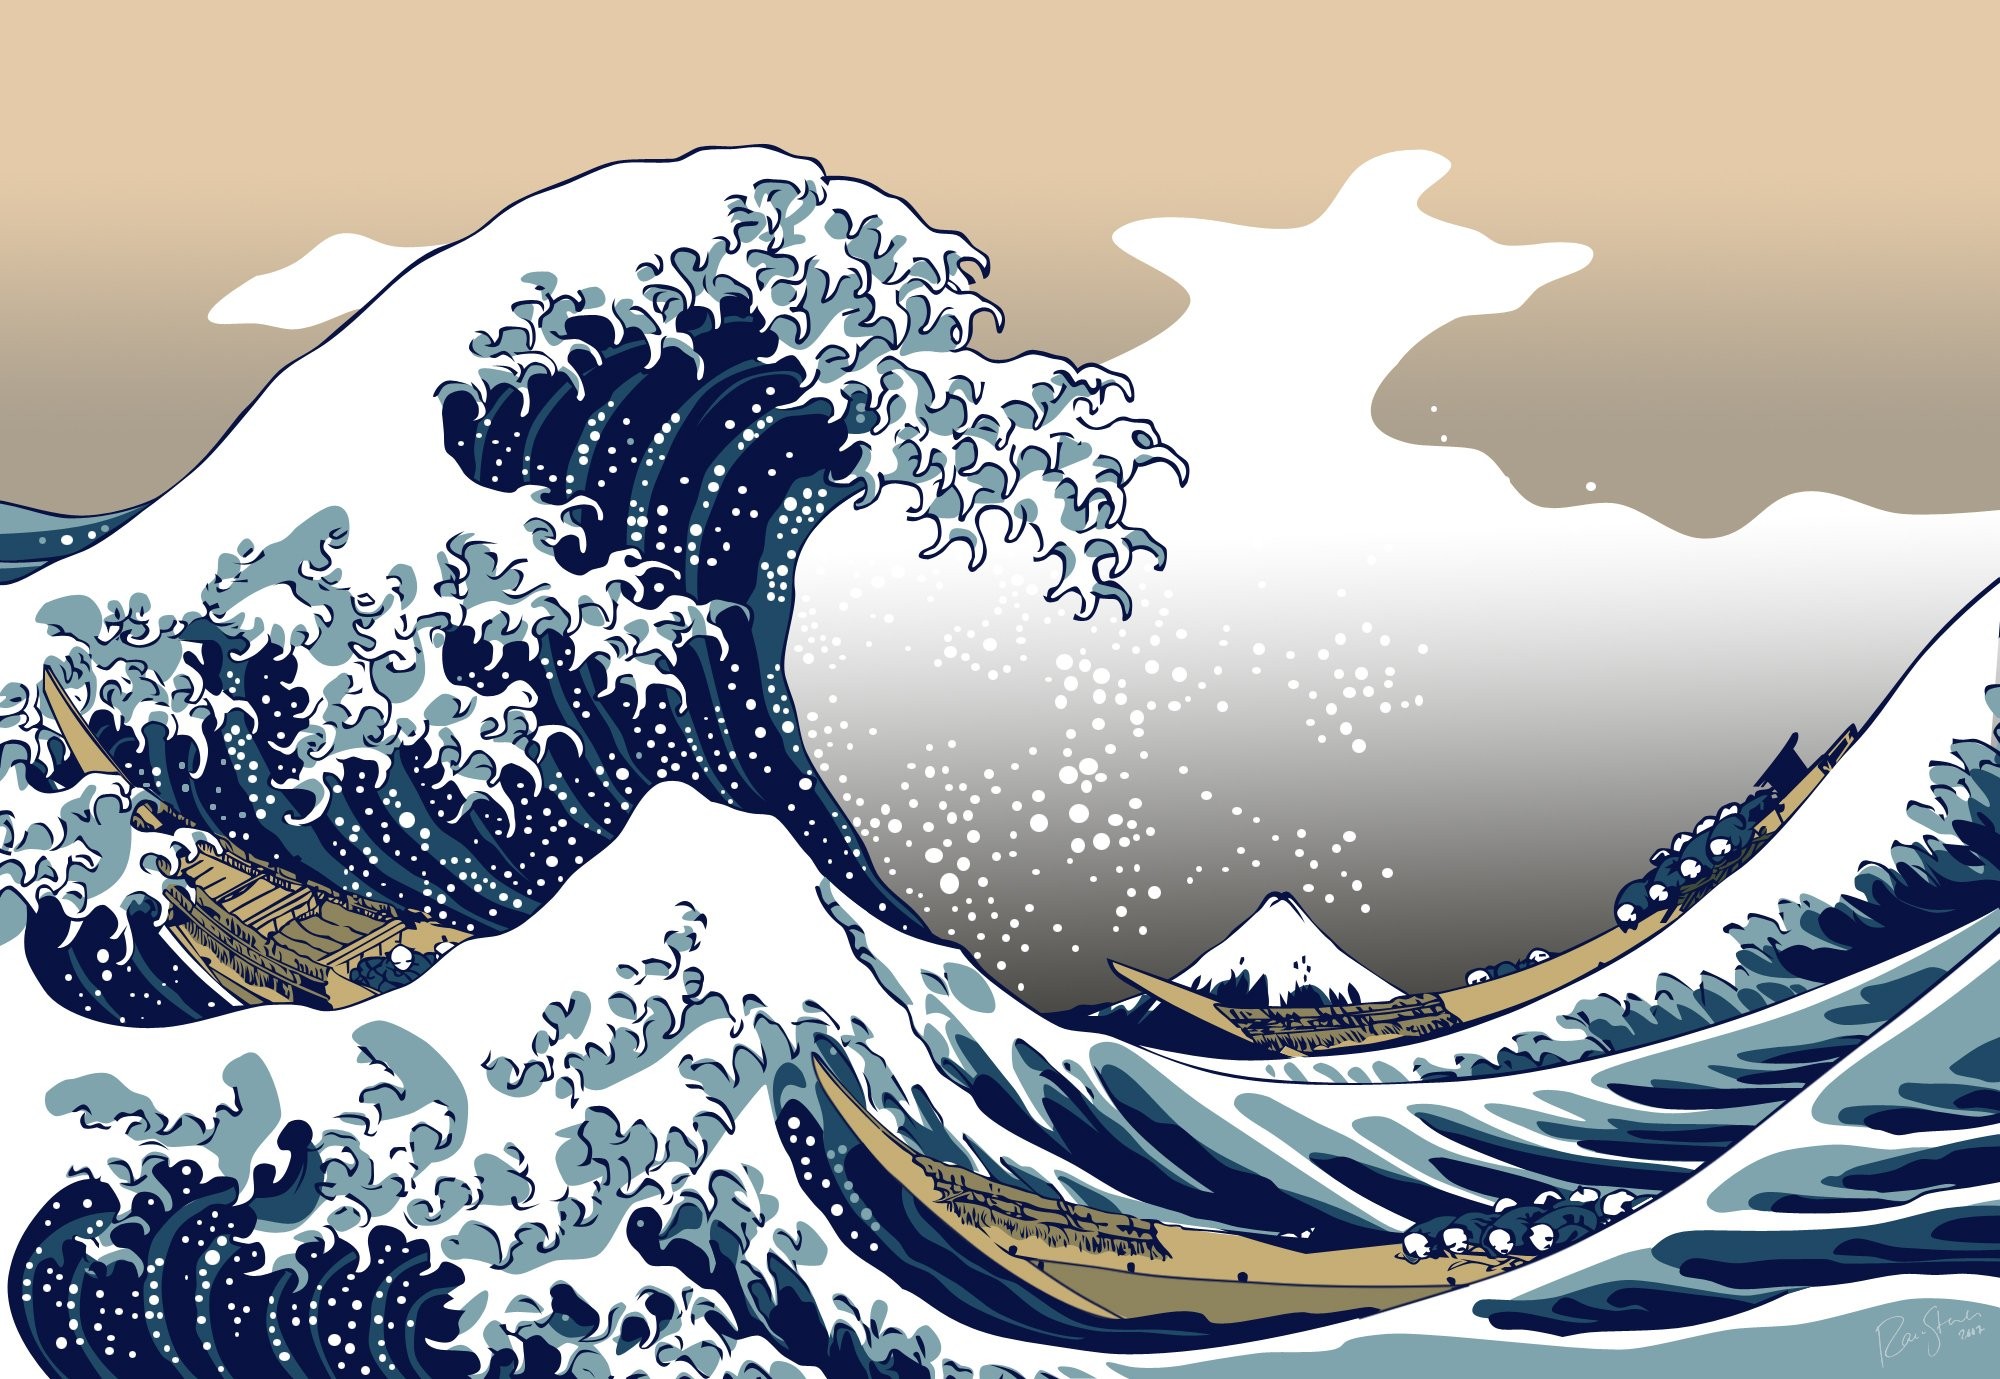 General 2000x1379 nature blue The Great Wave of Kanagawa sea waves Japan Asia Ukiyo-e classic art